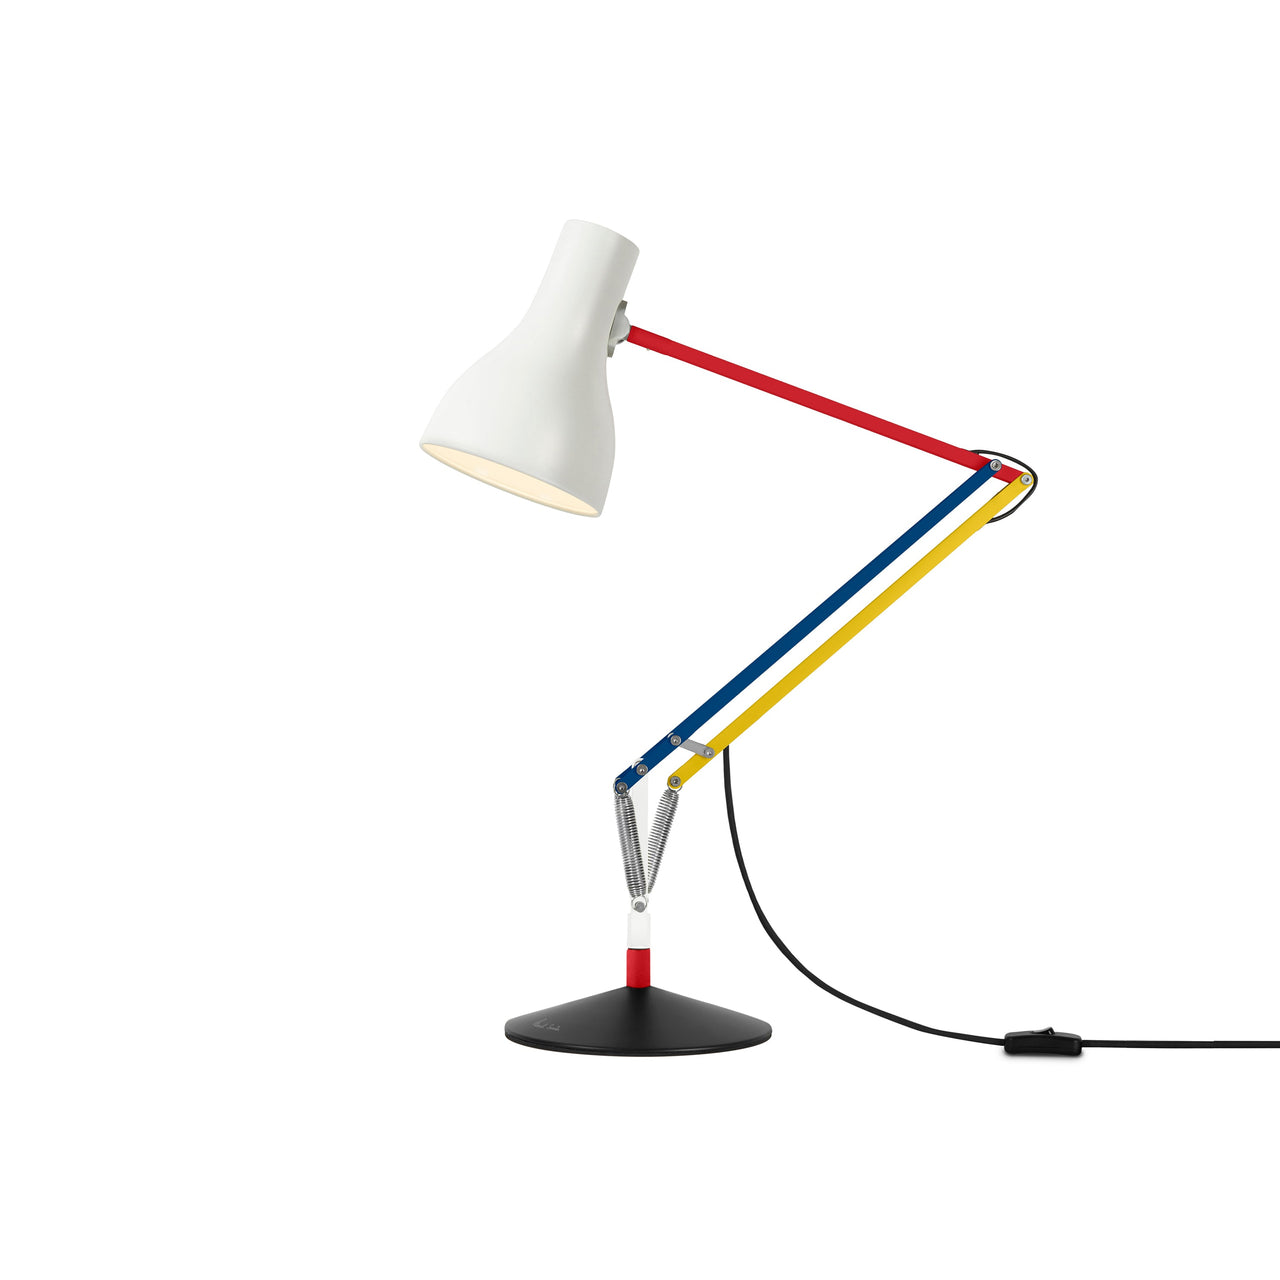 Type 75 Desk Lamp: Paul Smith Edition Three